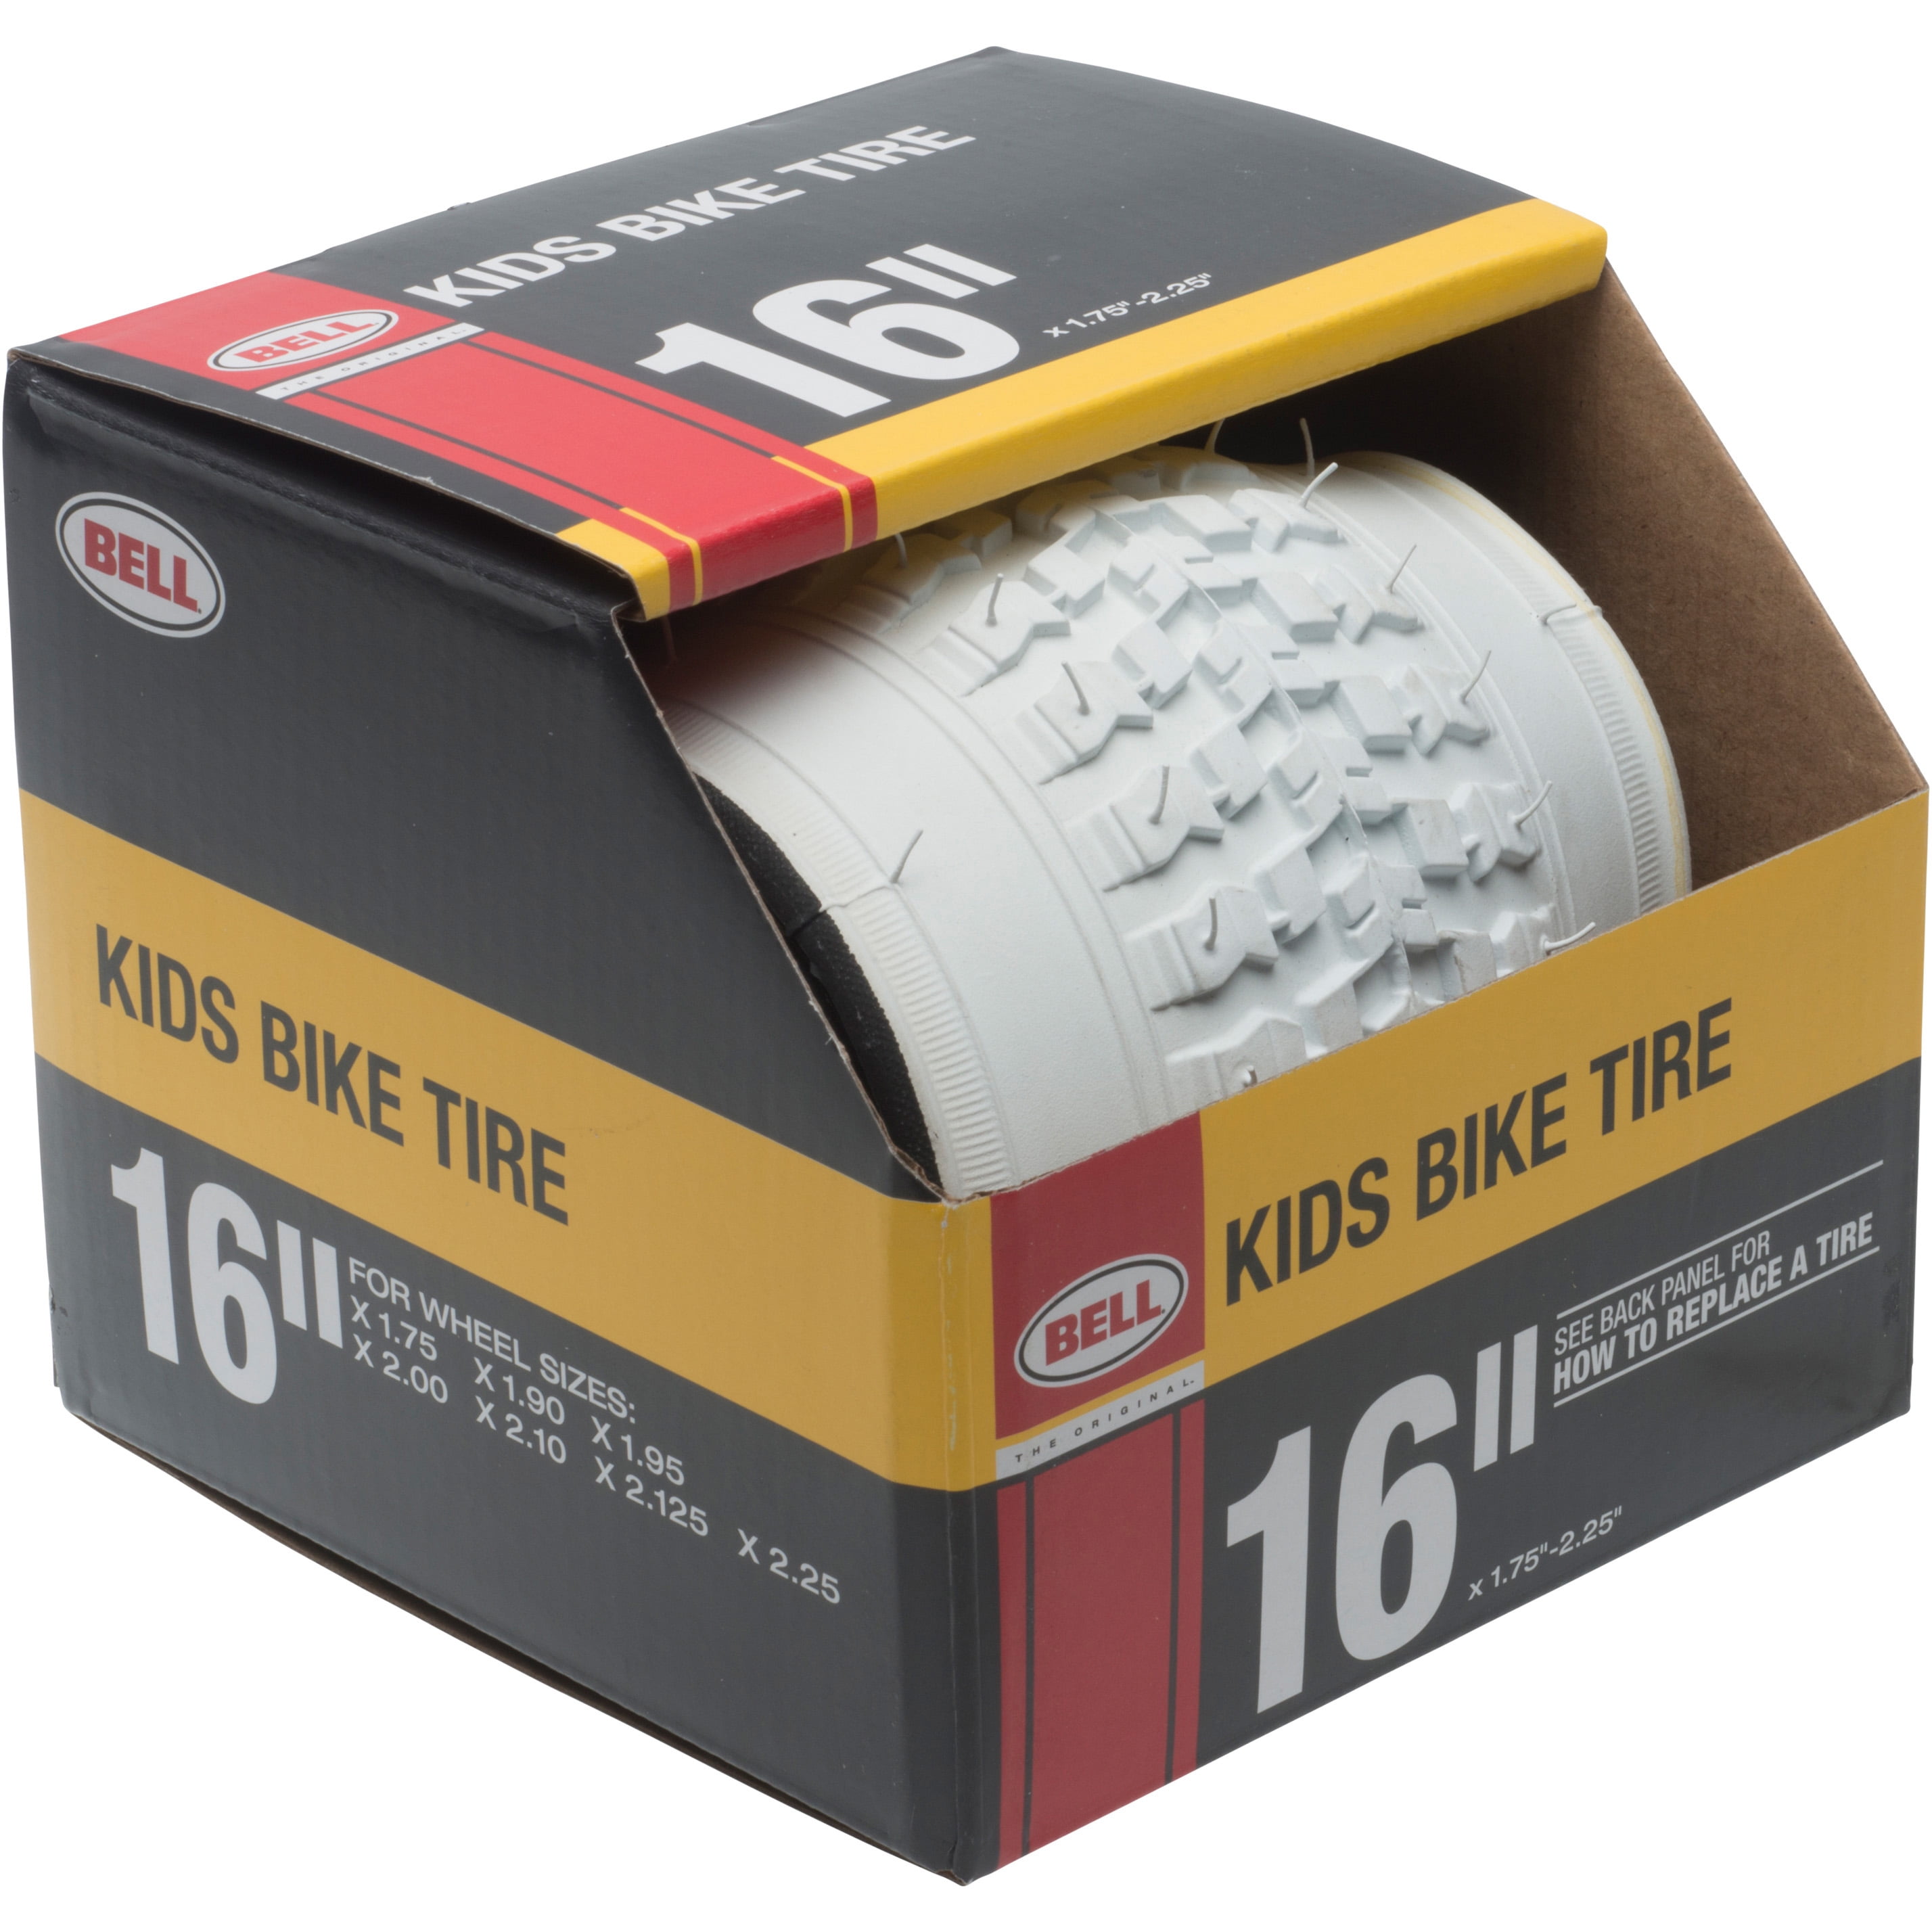 LAWN KARTS TUBE 16 X 1.75 KENDA KIDS BICYCLE FOR TRAILER BMX BLACK 